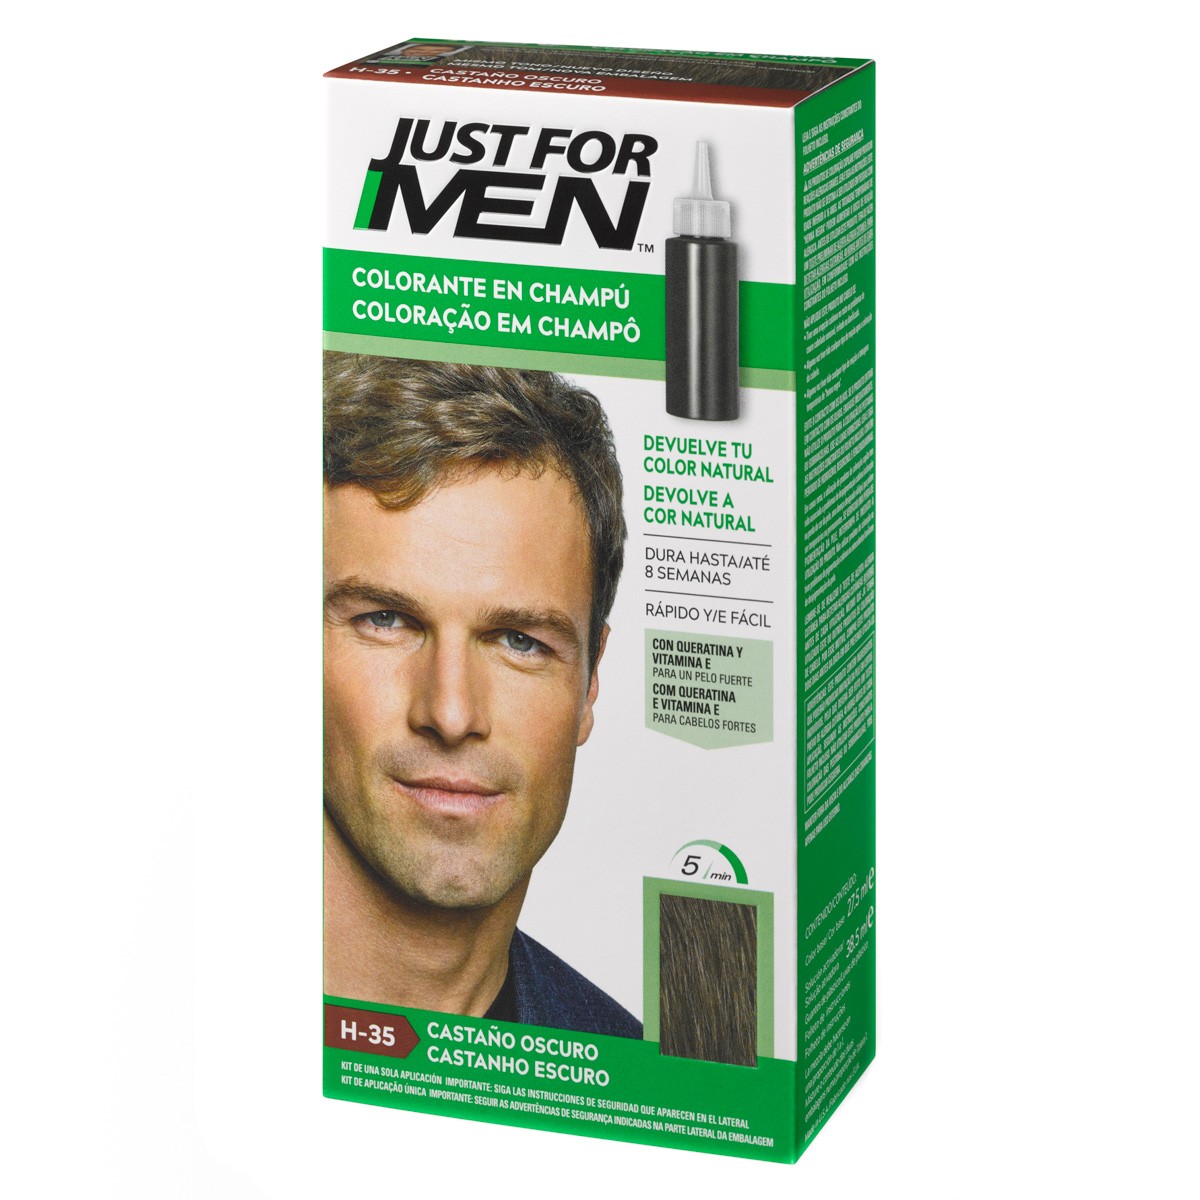 Imagen de Just for men colorante en champú castaño oscuro